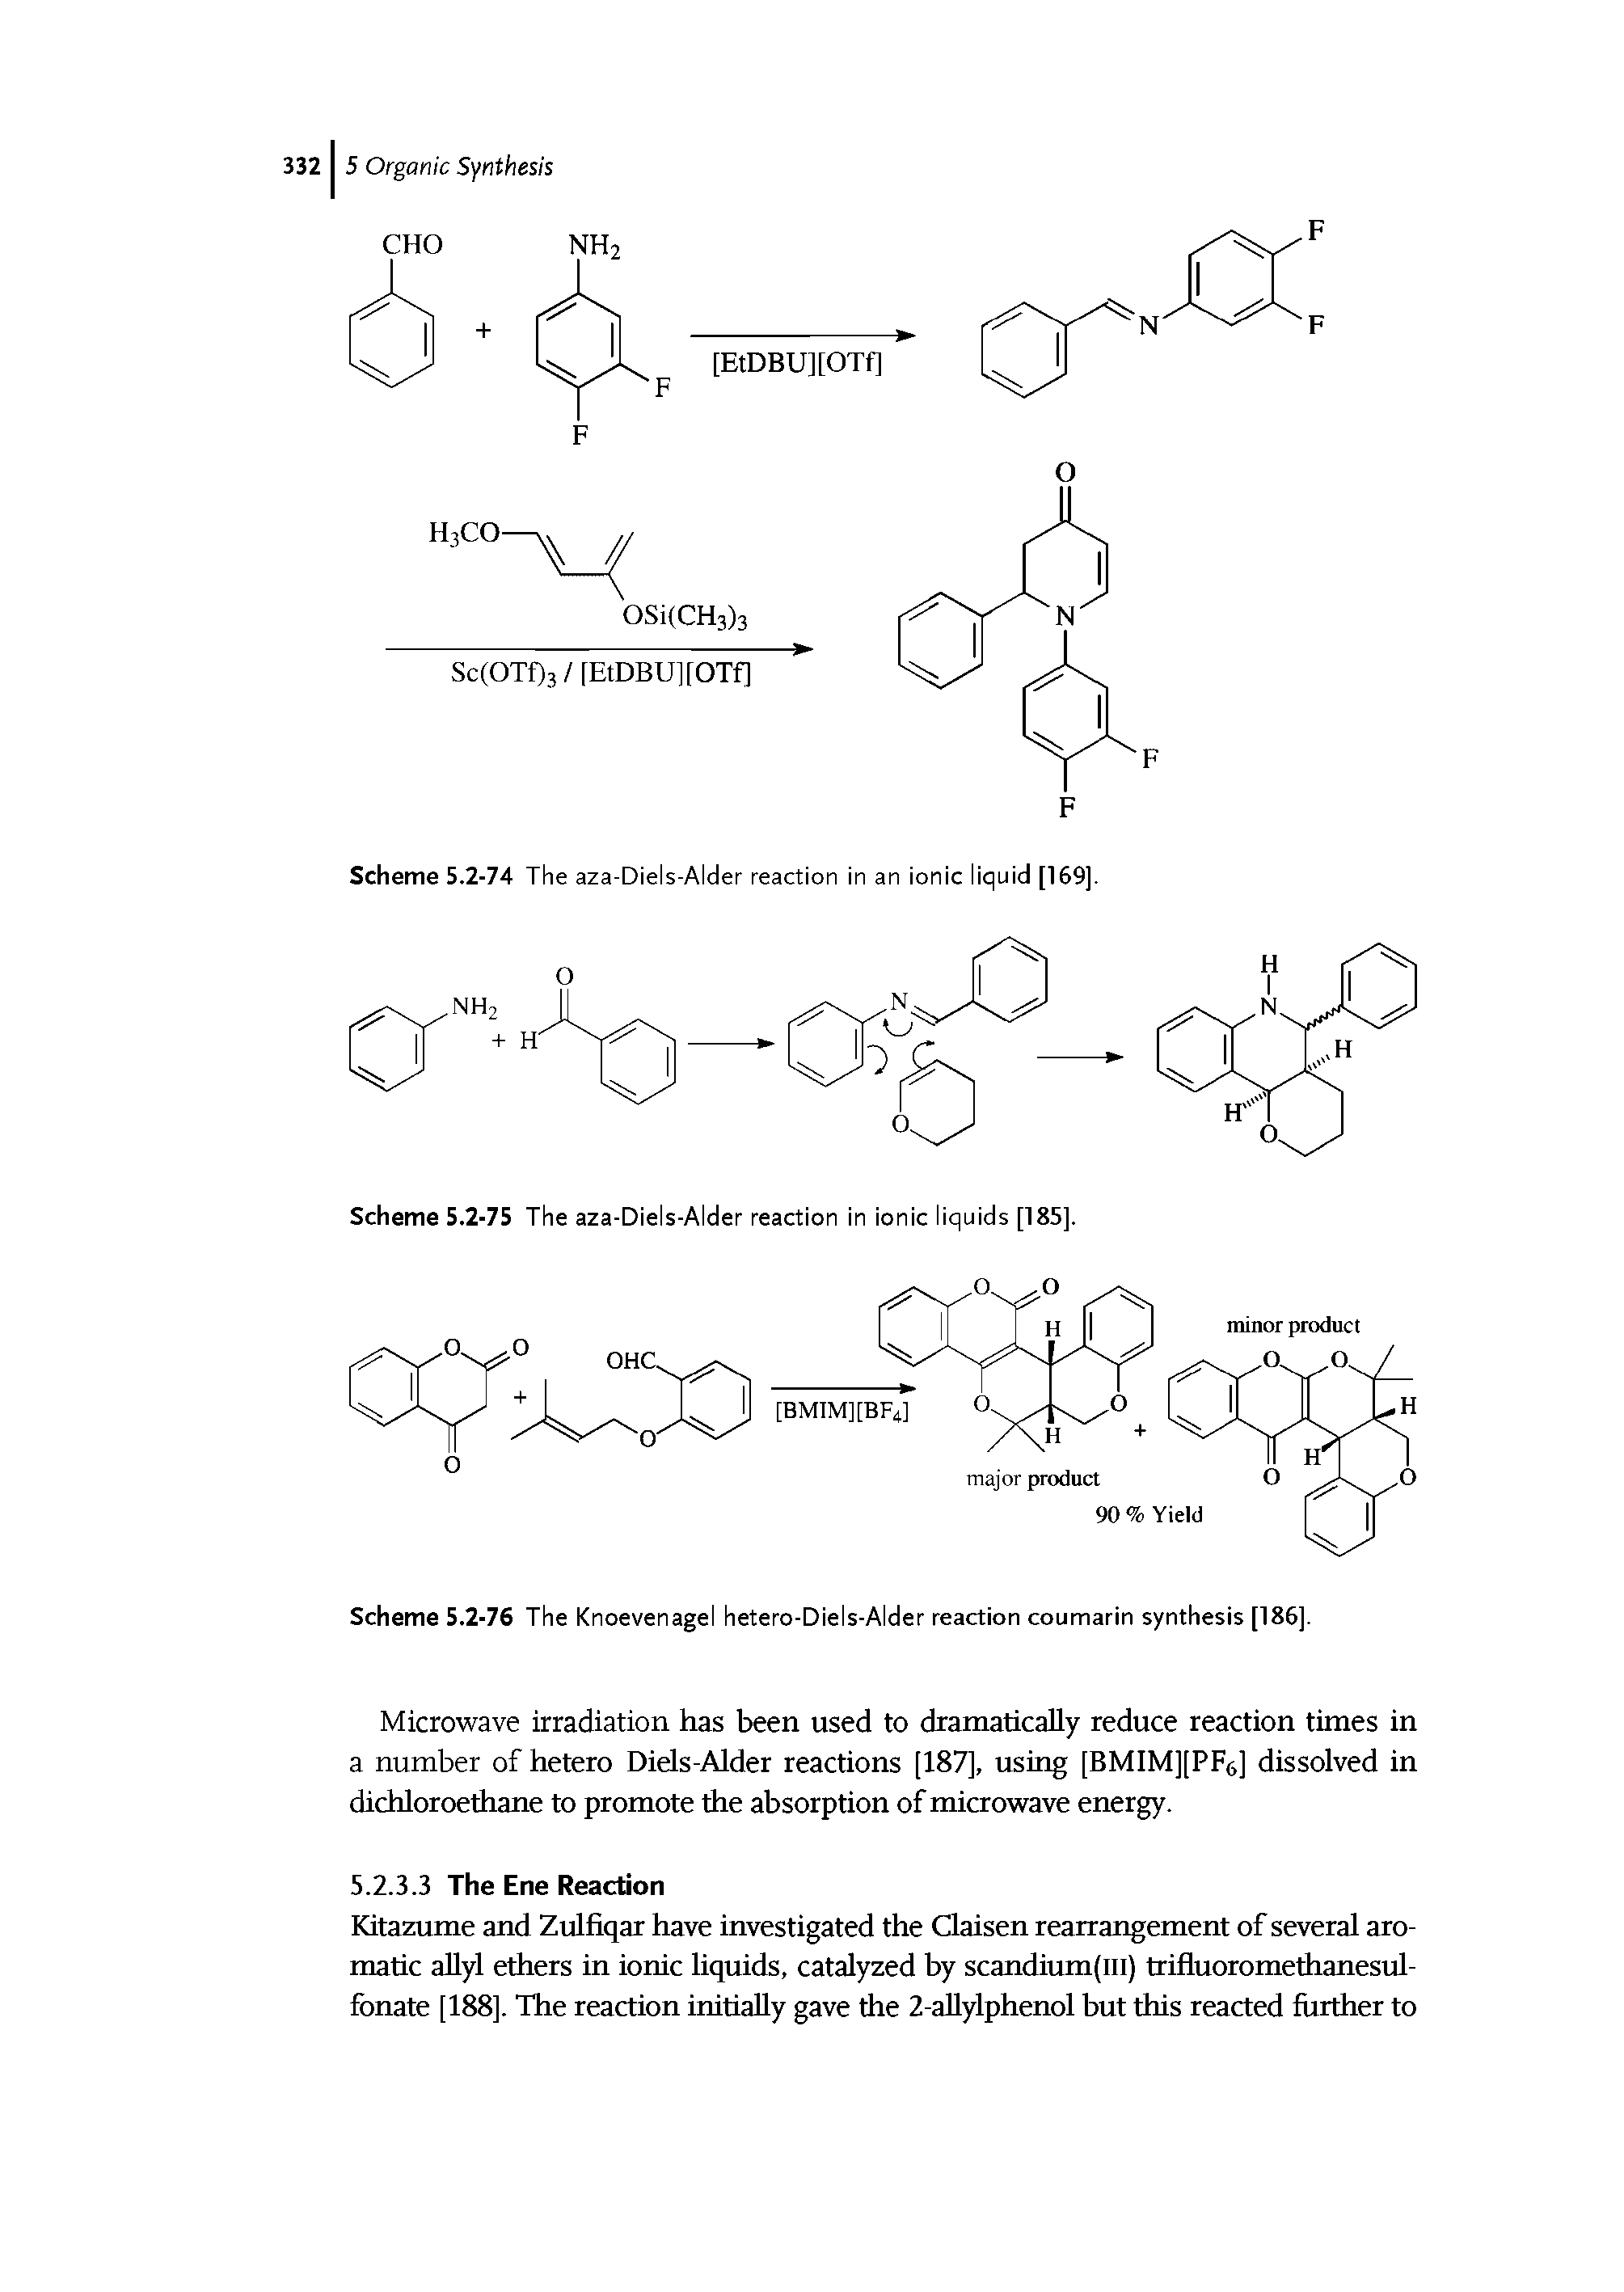 Scheme 5.2-75 The aza-Diels-Alder reaction in ionic liquids [185].